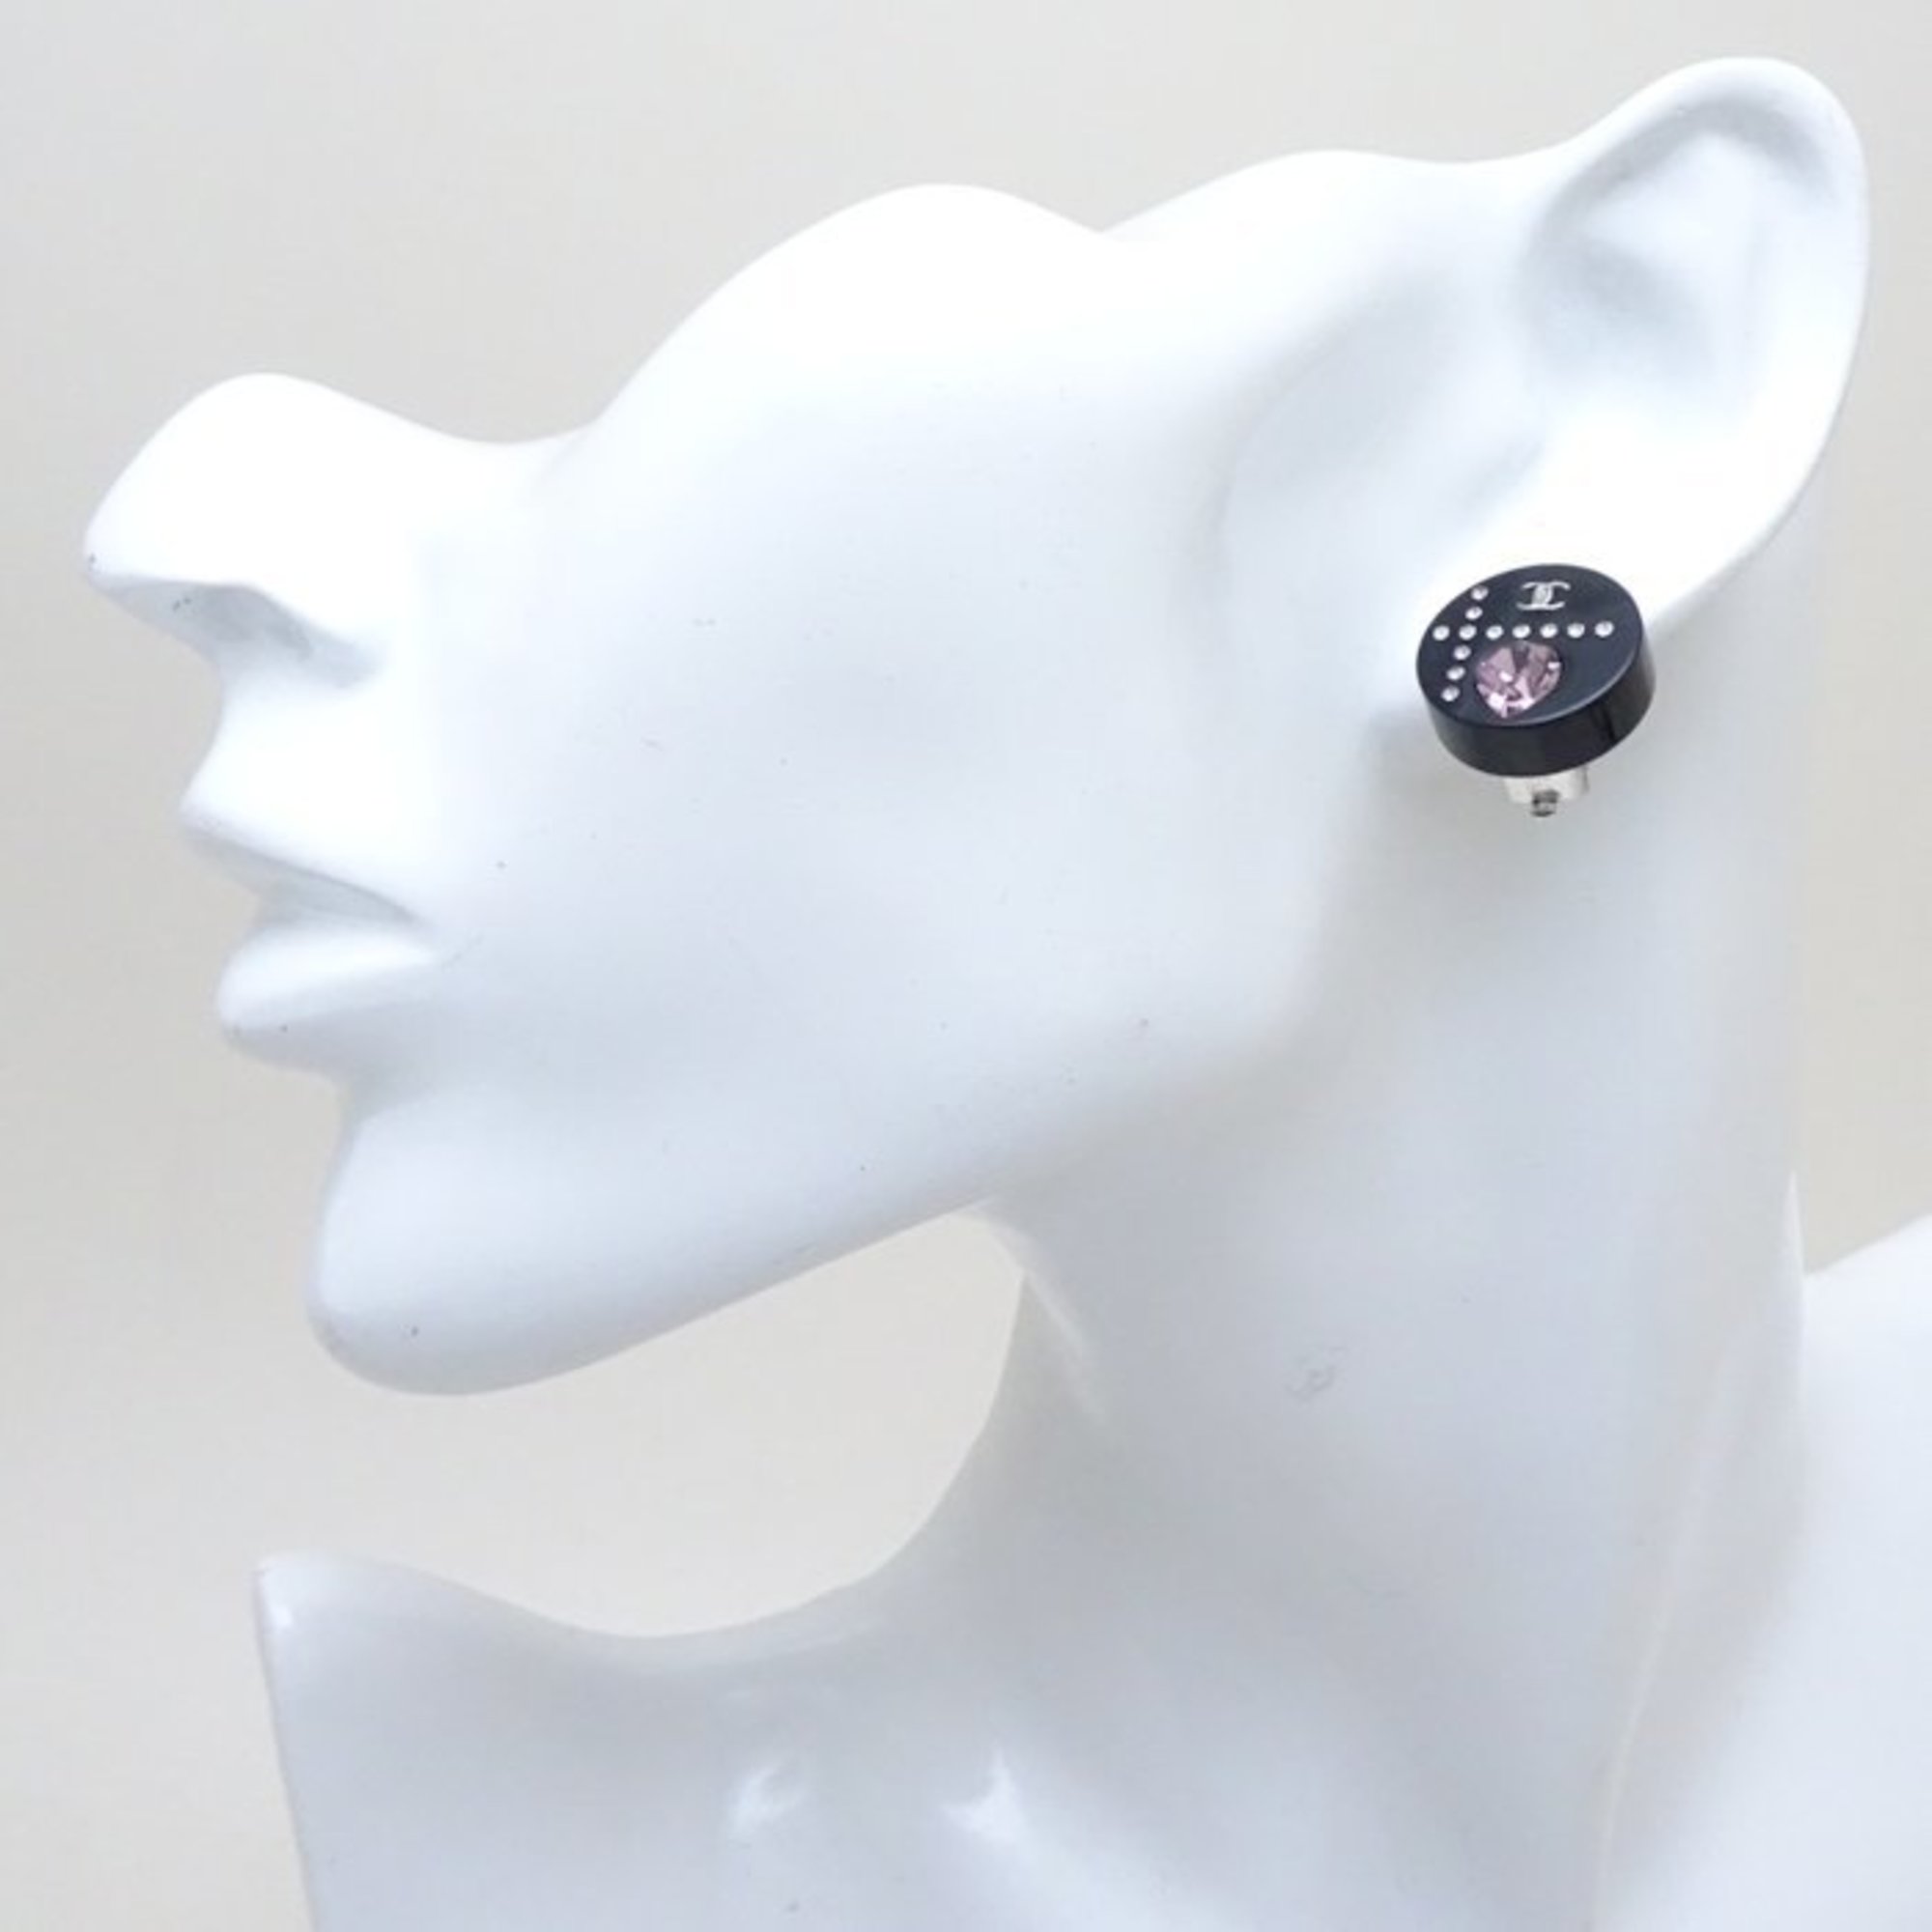 CHANEL Cocomark Heart Earrings 04A Rhinestone Black Plastic 290954